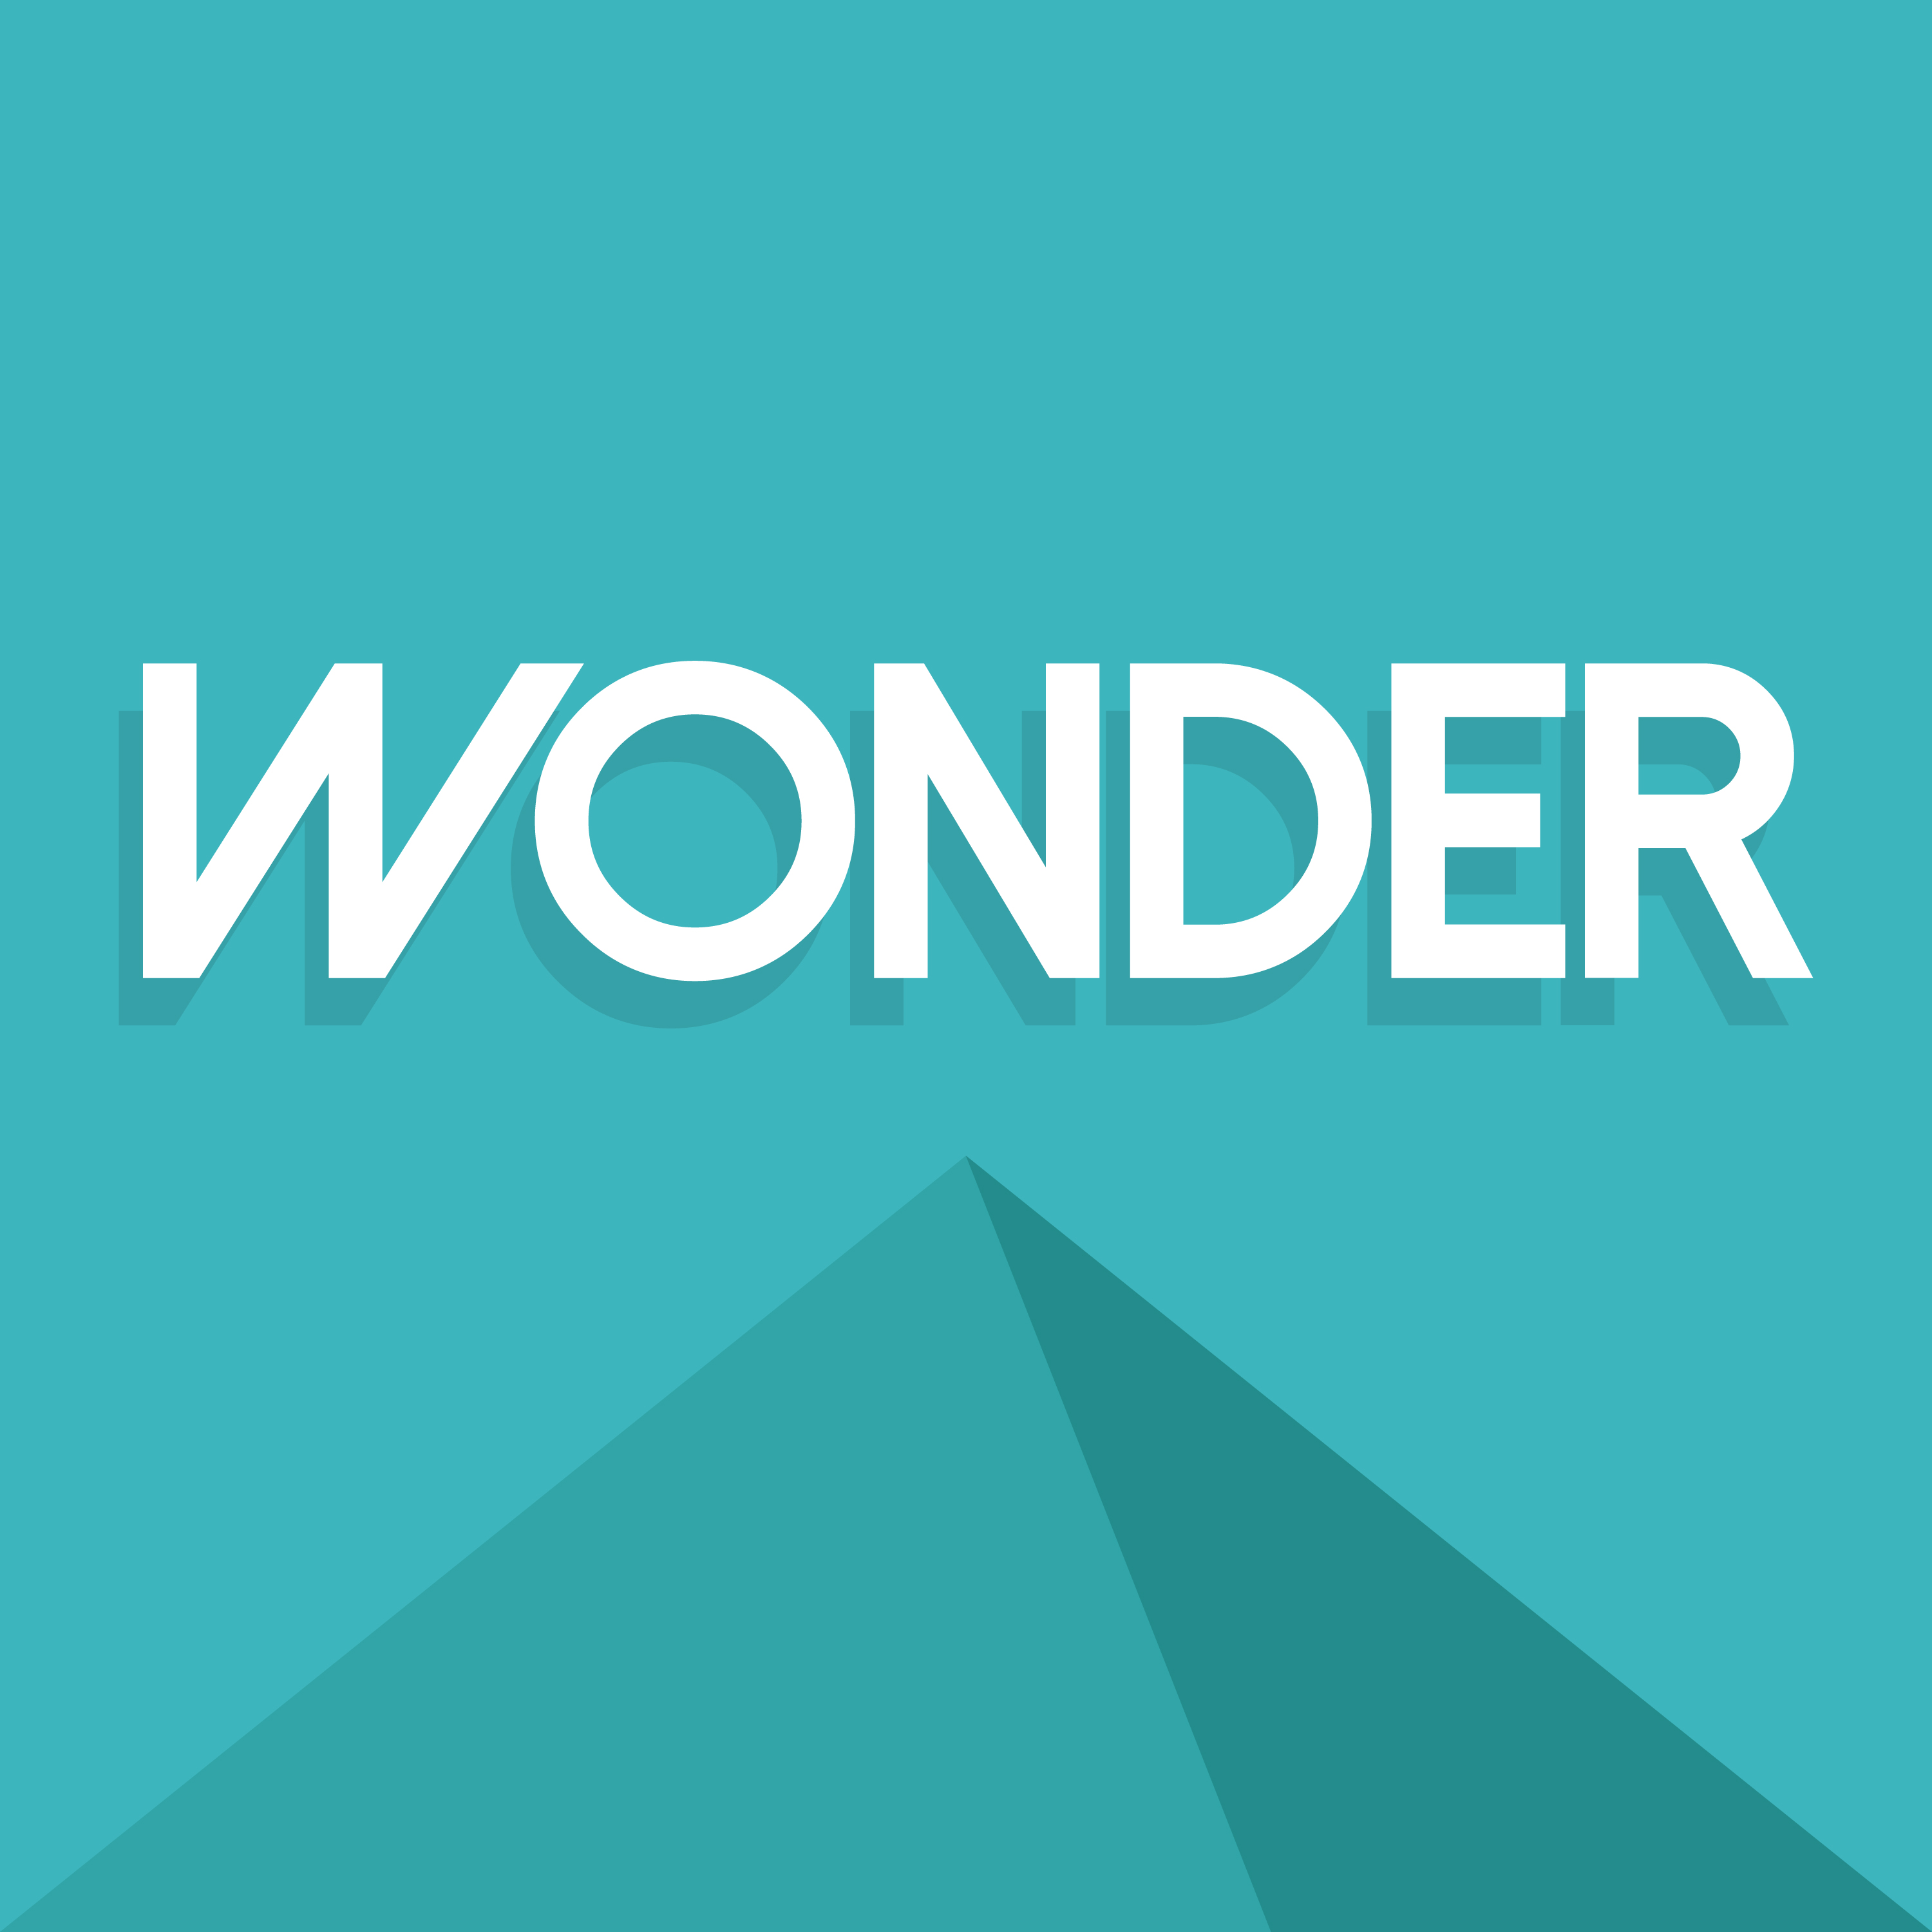 Wonder S1 Ep 05 - A Scientific Life